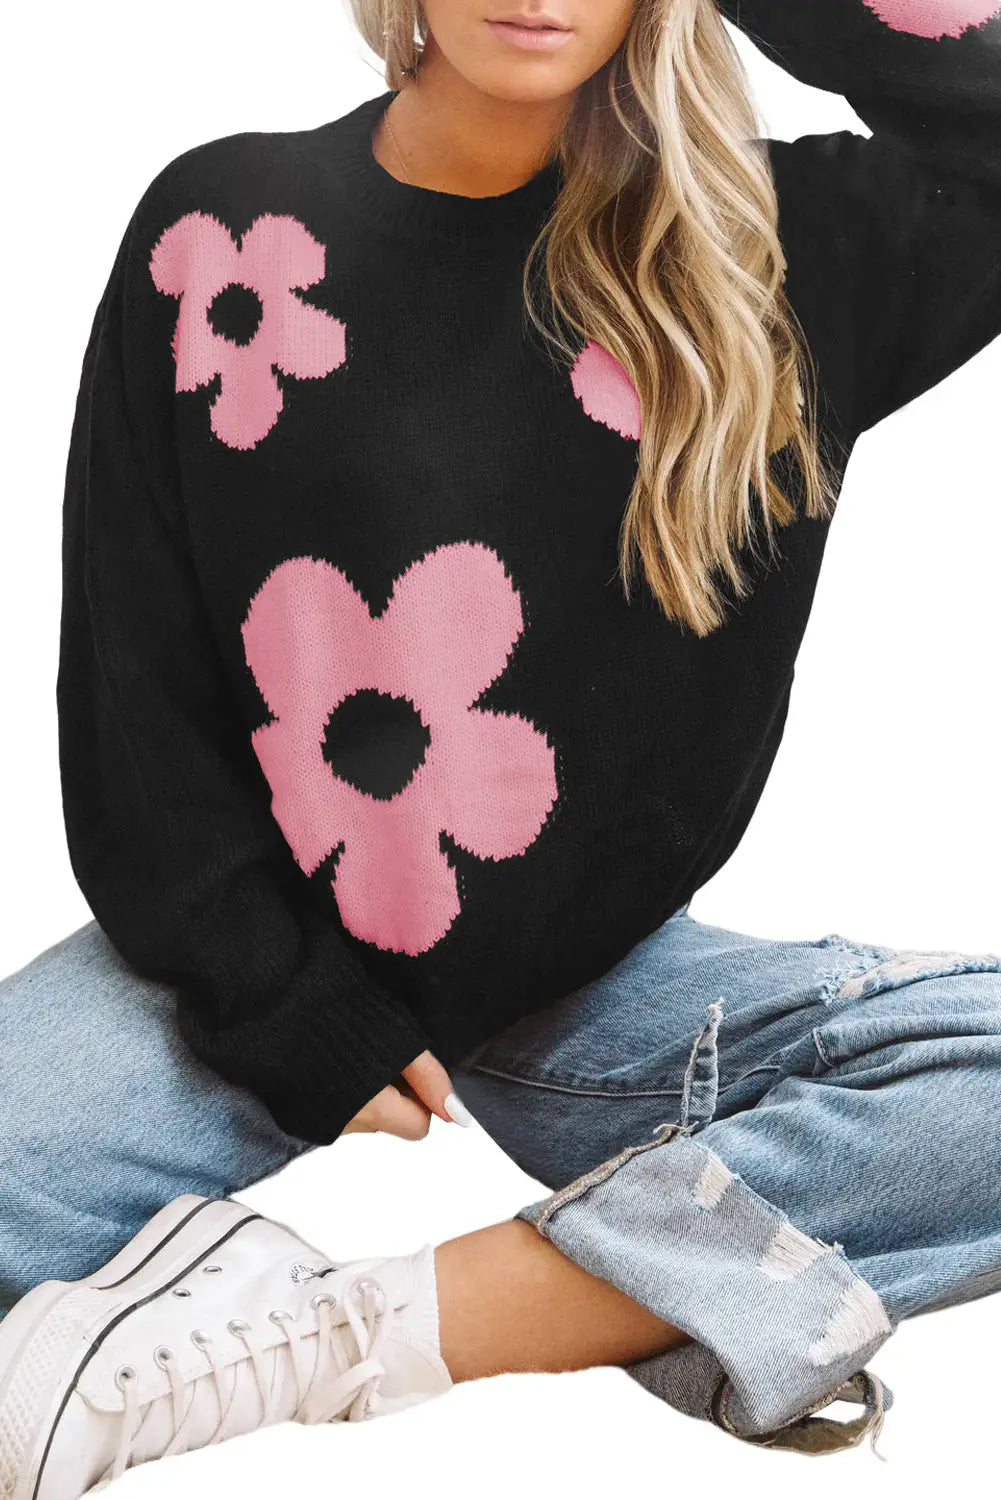 Big flower pattern knit sweater - sweaters & cardigans